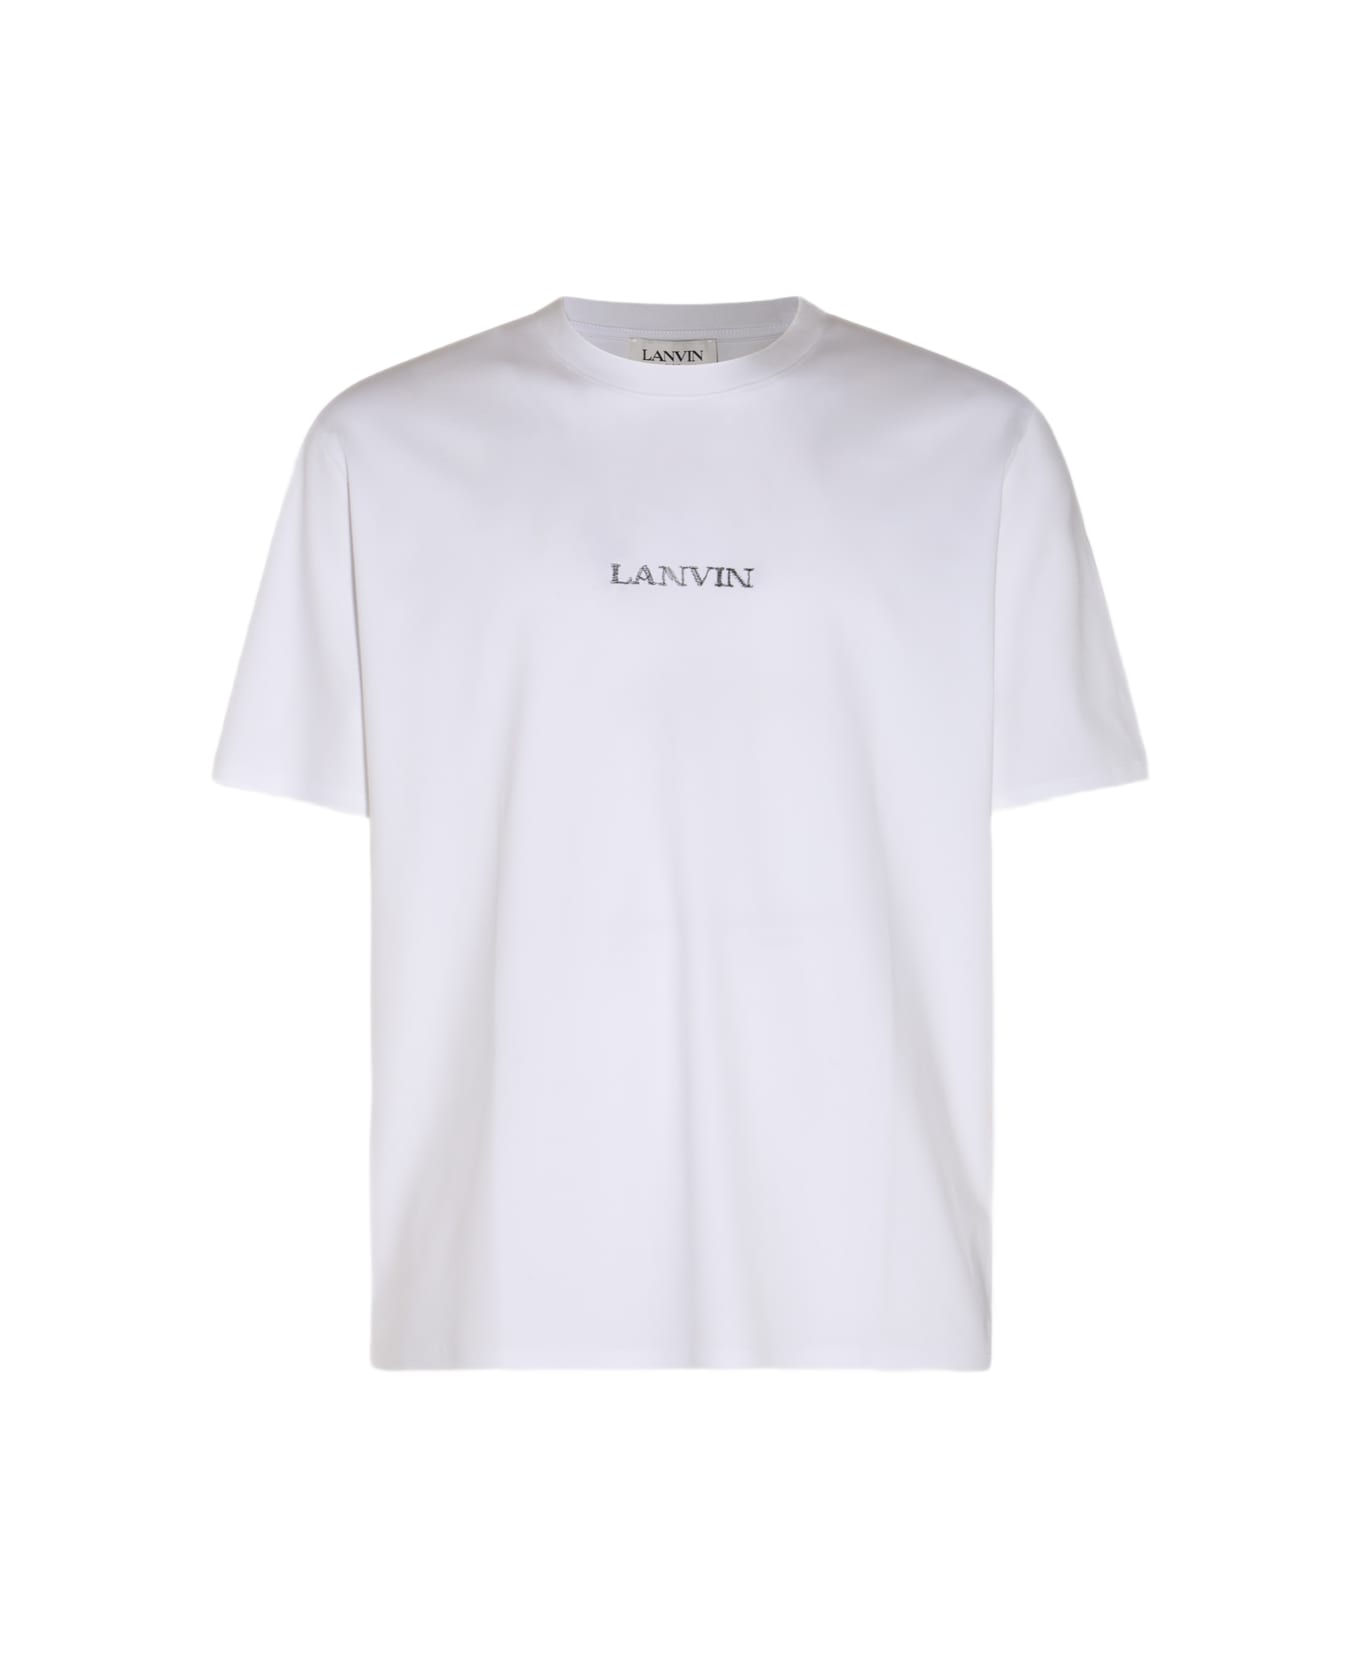 Lanvin White Cotton T-shirt - White シャツ